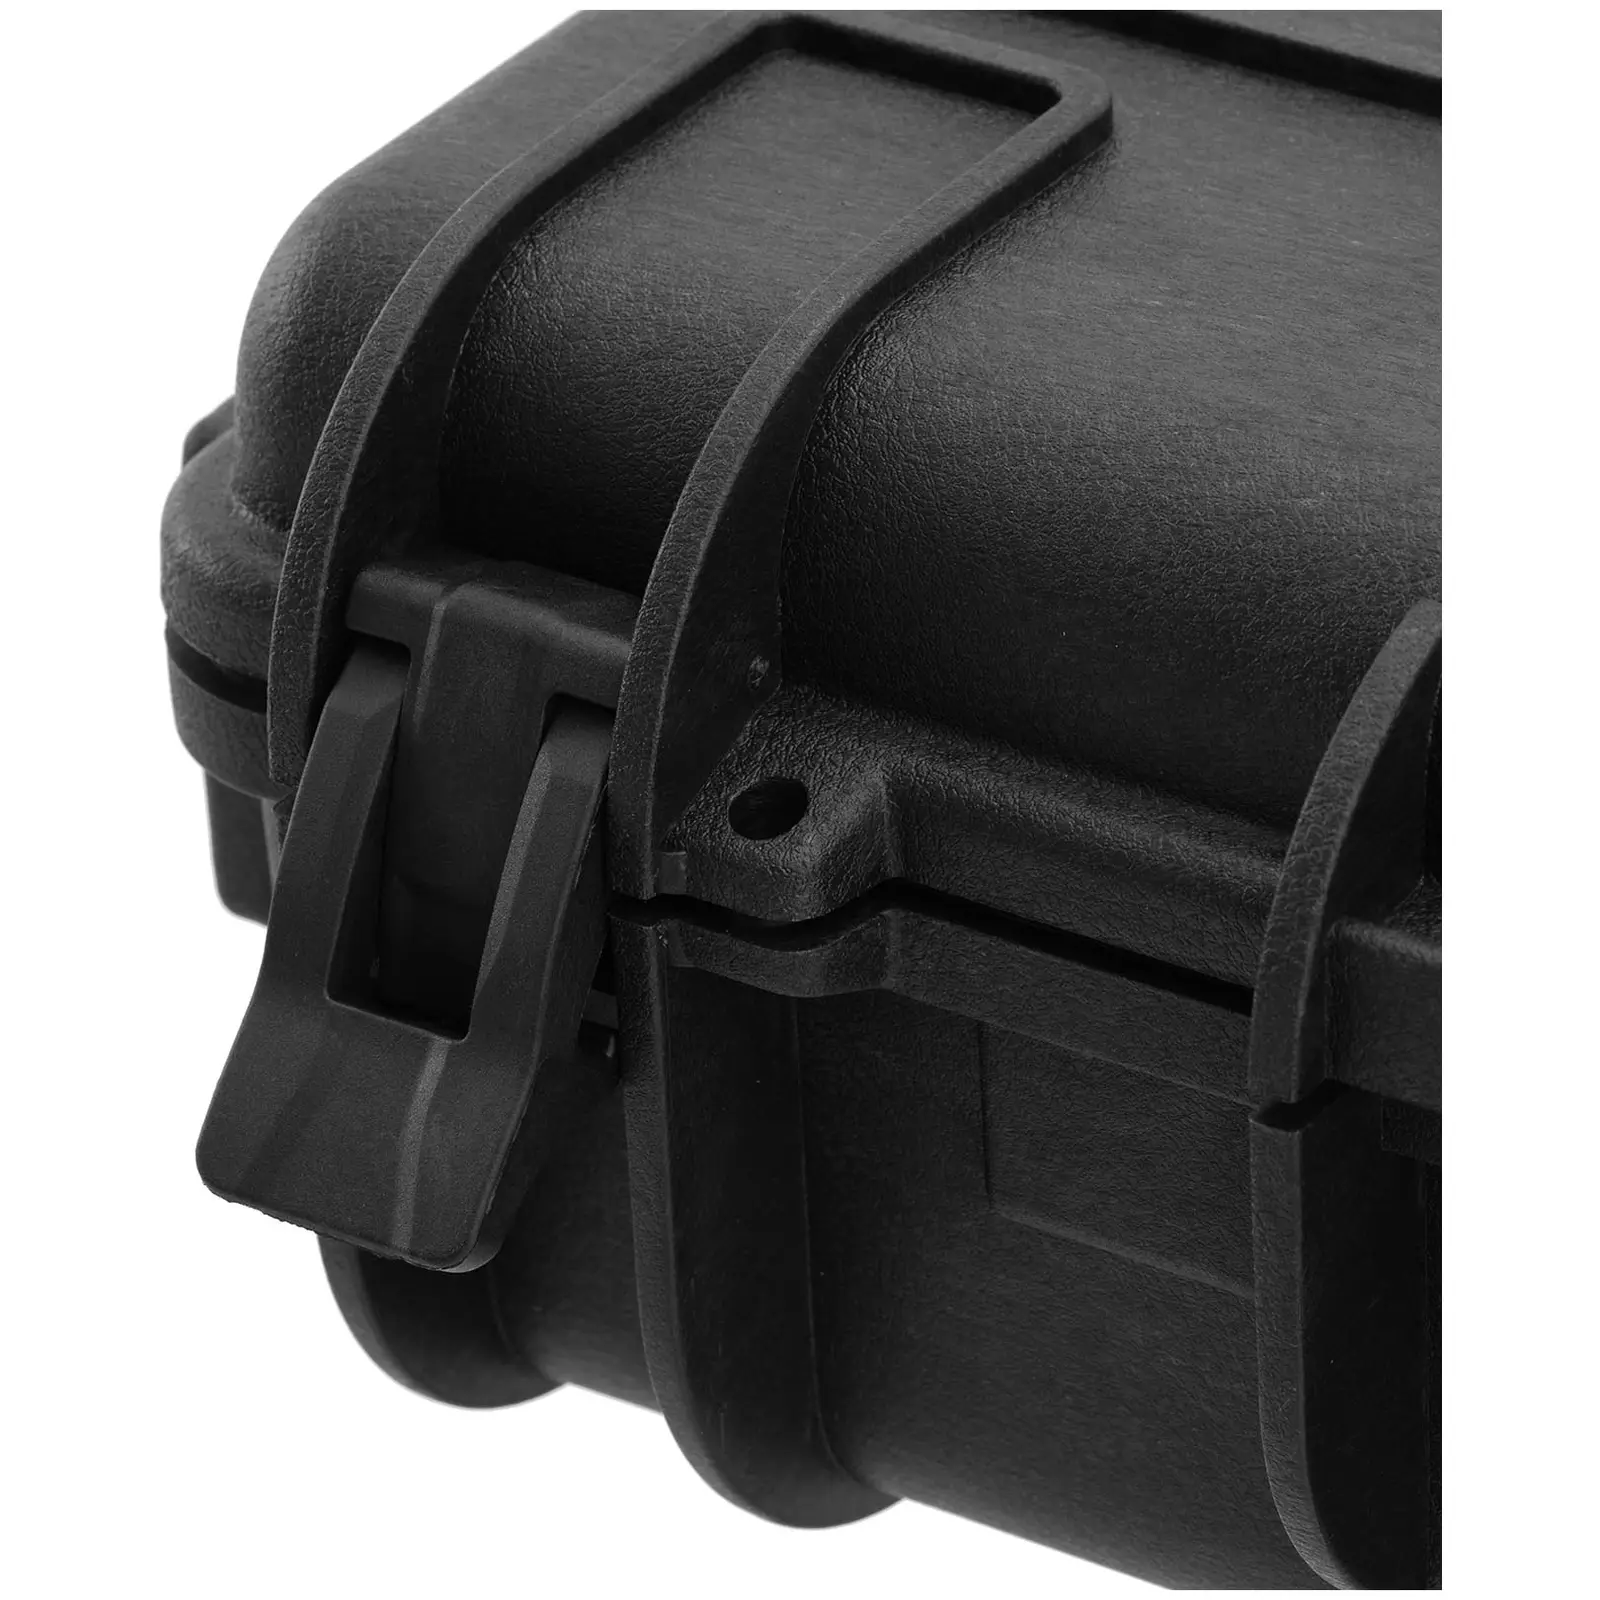 Hard Carrying Case - waterproof - 53 l - black - wheels - telescopic handle